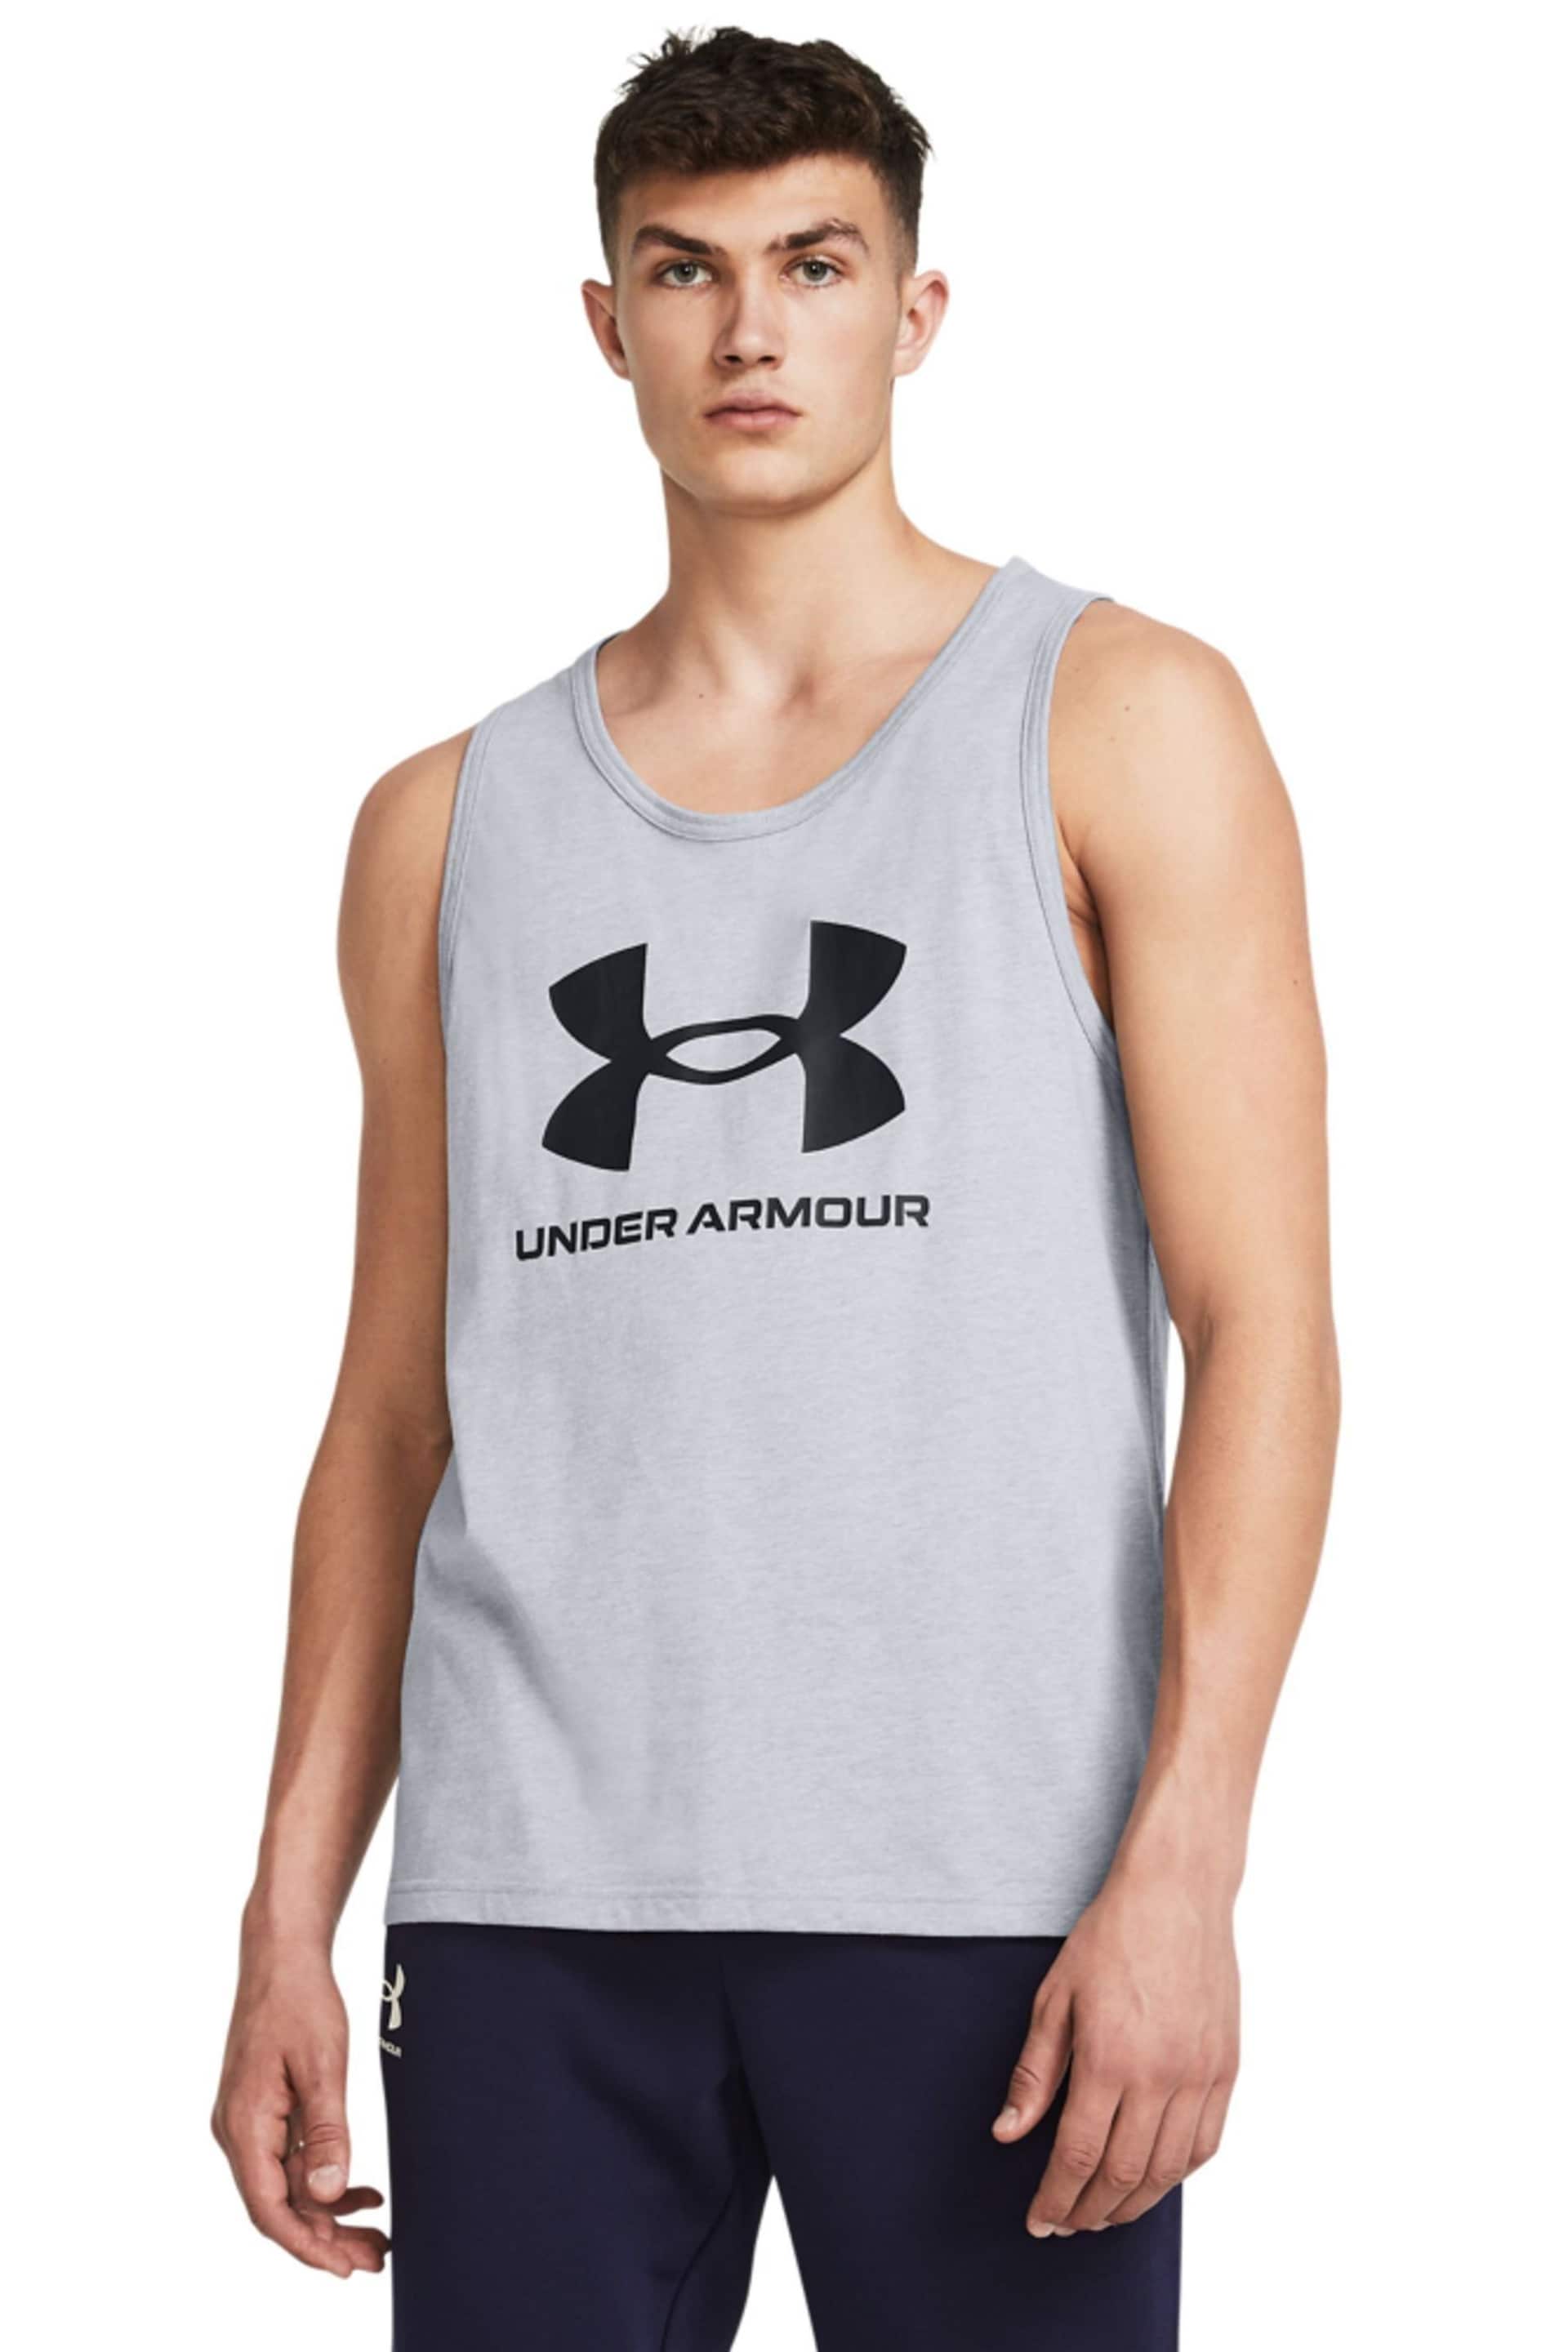 Under Armour Grey/Black Sportstyle Logo Vest - Image 1 of 4